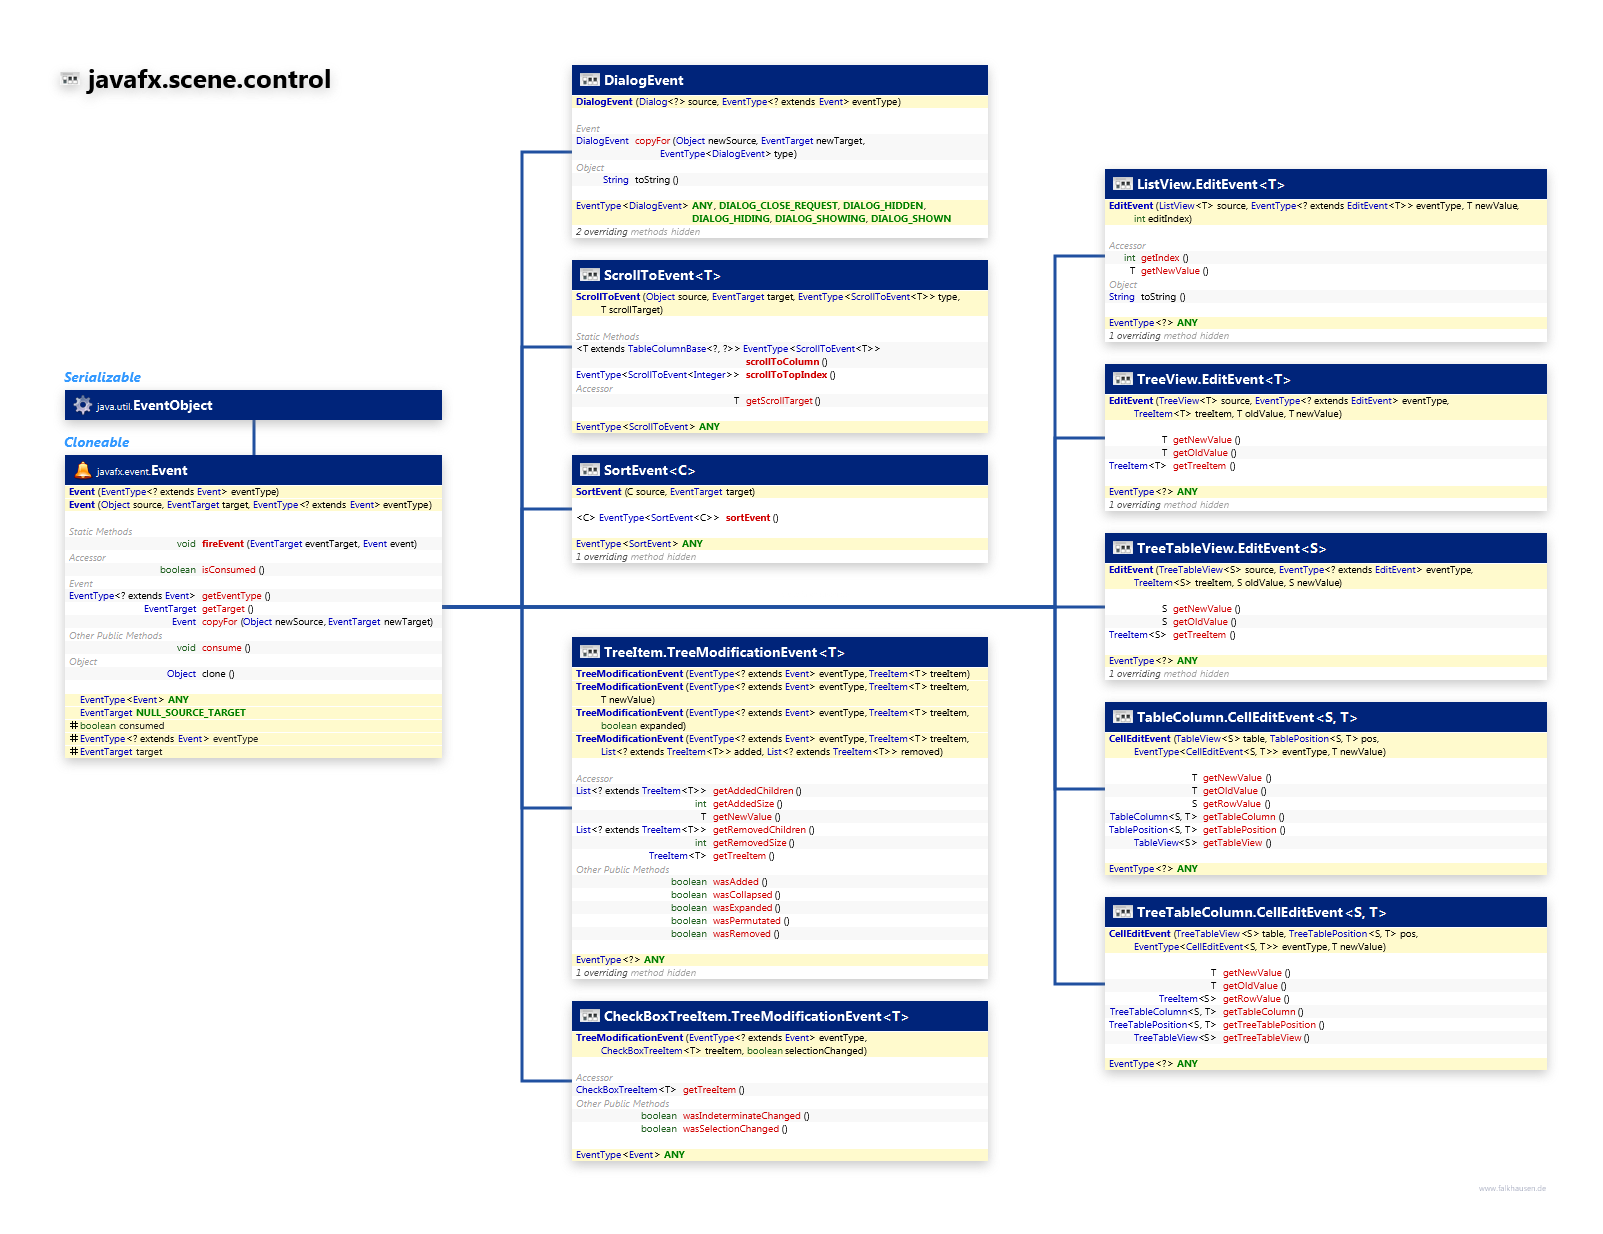 javafx.scene.control Control Event class diagram and api documentation for JavaFX 8